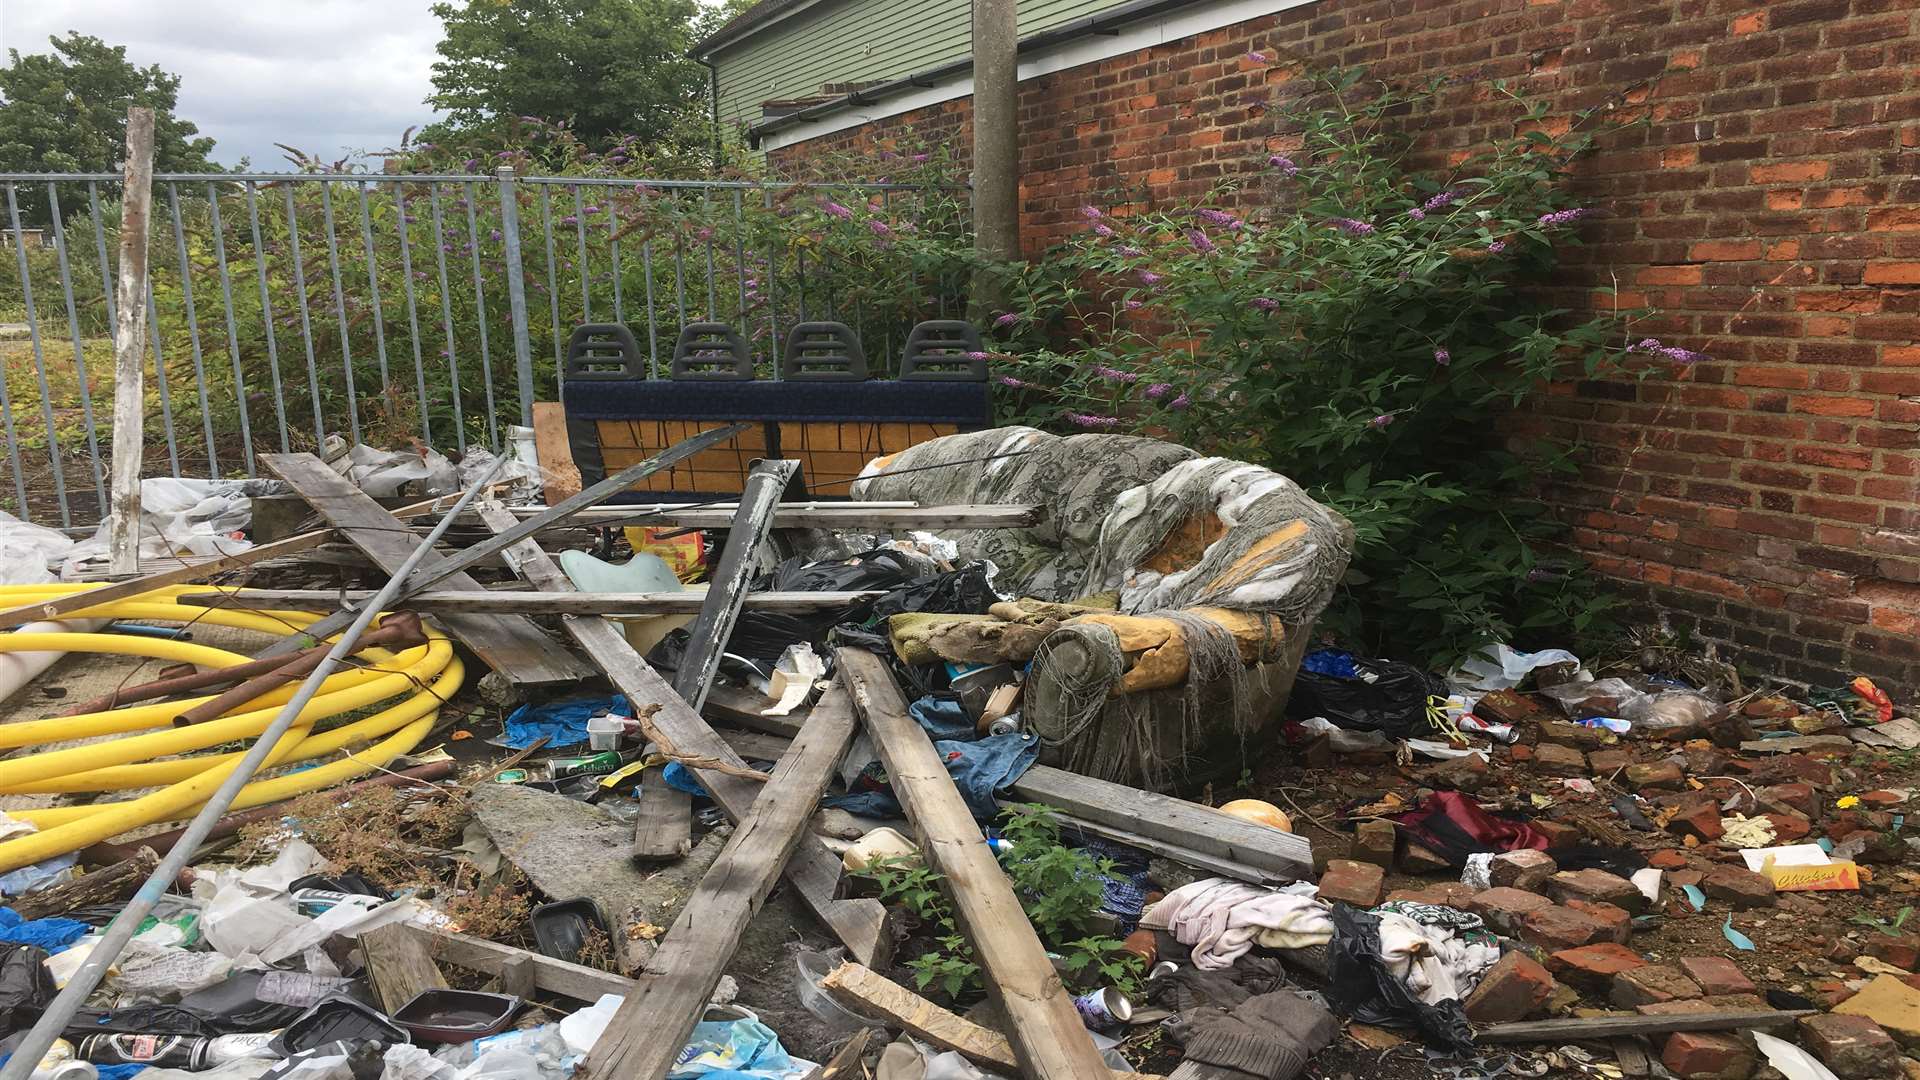 The rubbish in East Street, Sittingbourne